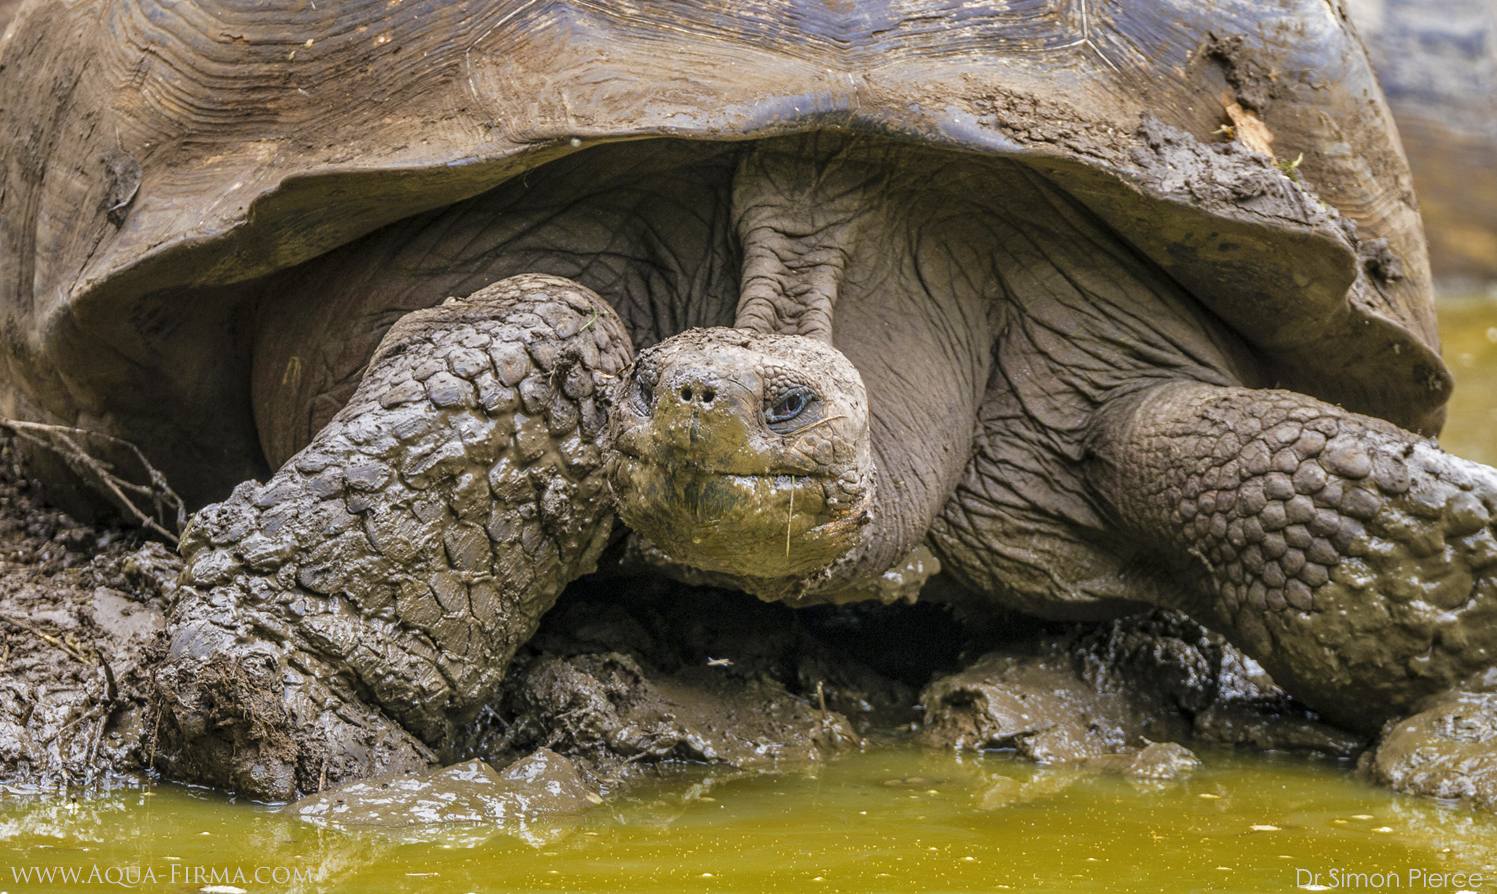 Galapagos Giant Tortoise Santa Cruz Highlands photo by Dr Simon Pierce